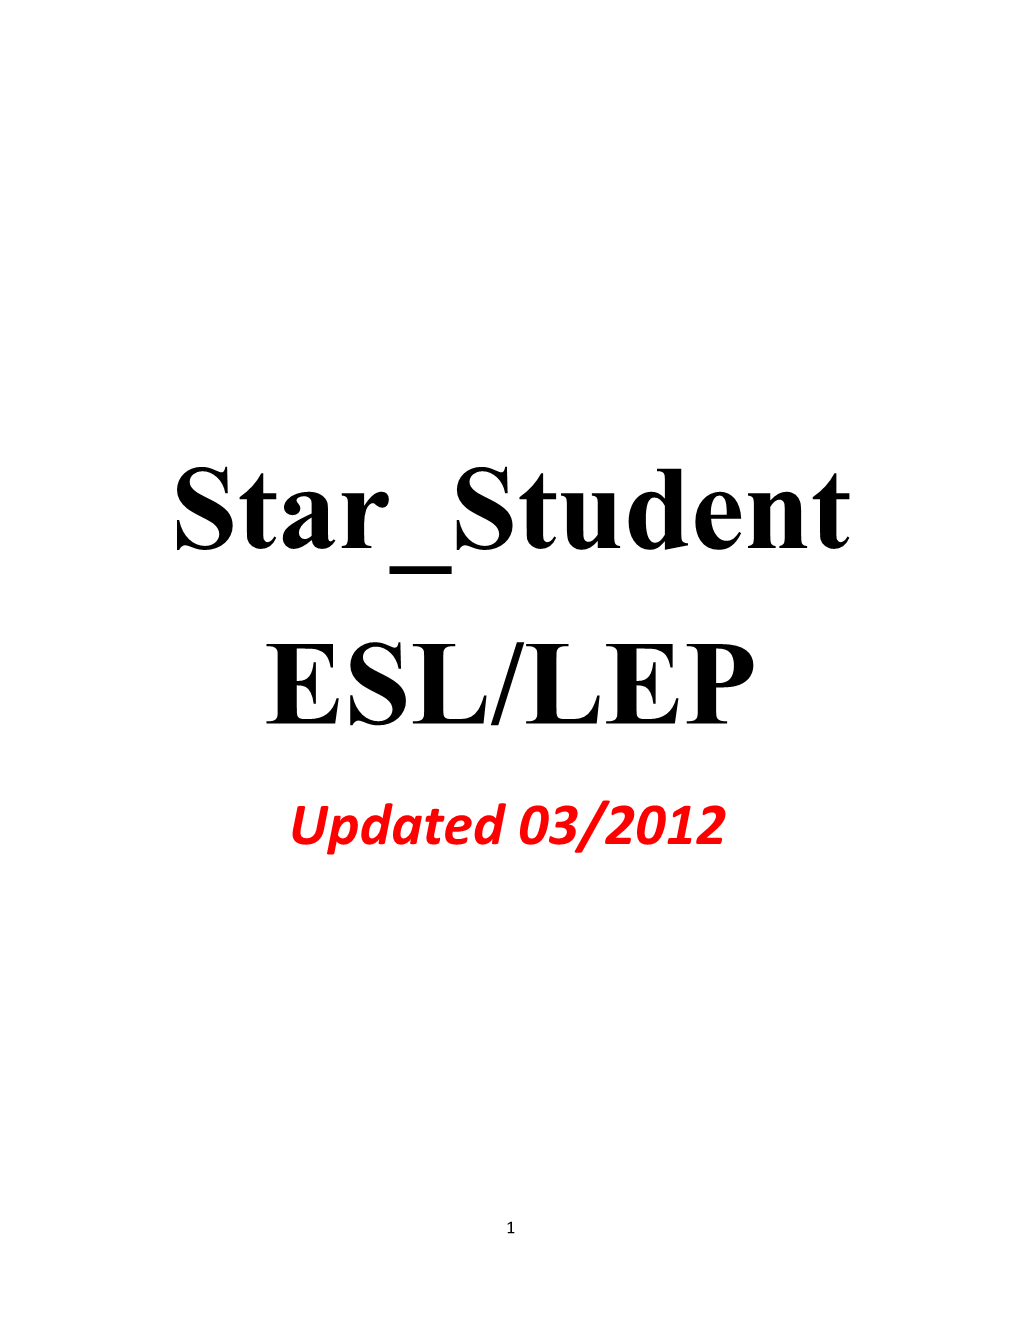 ESL/LEP and Immigrant Status Data